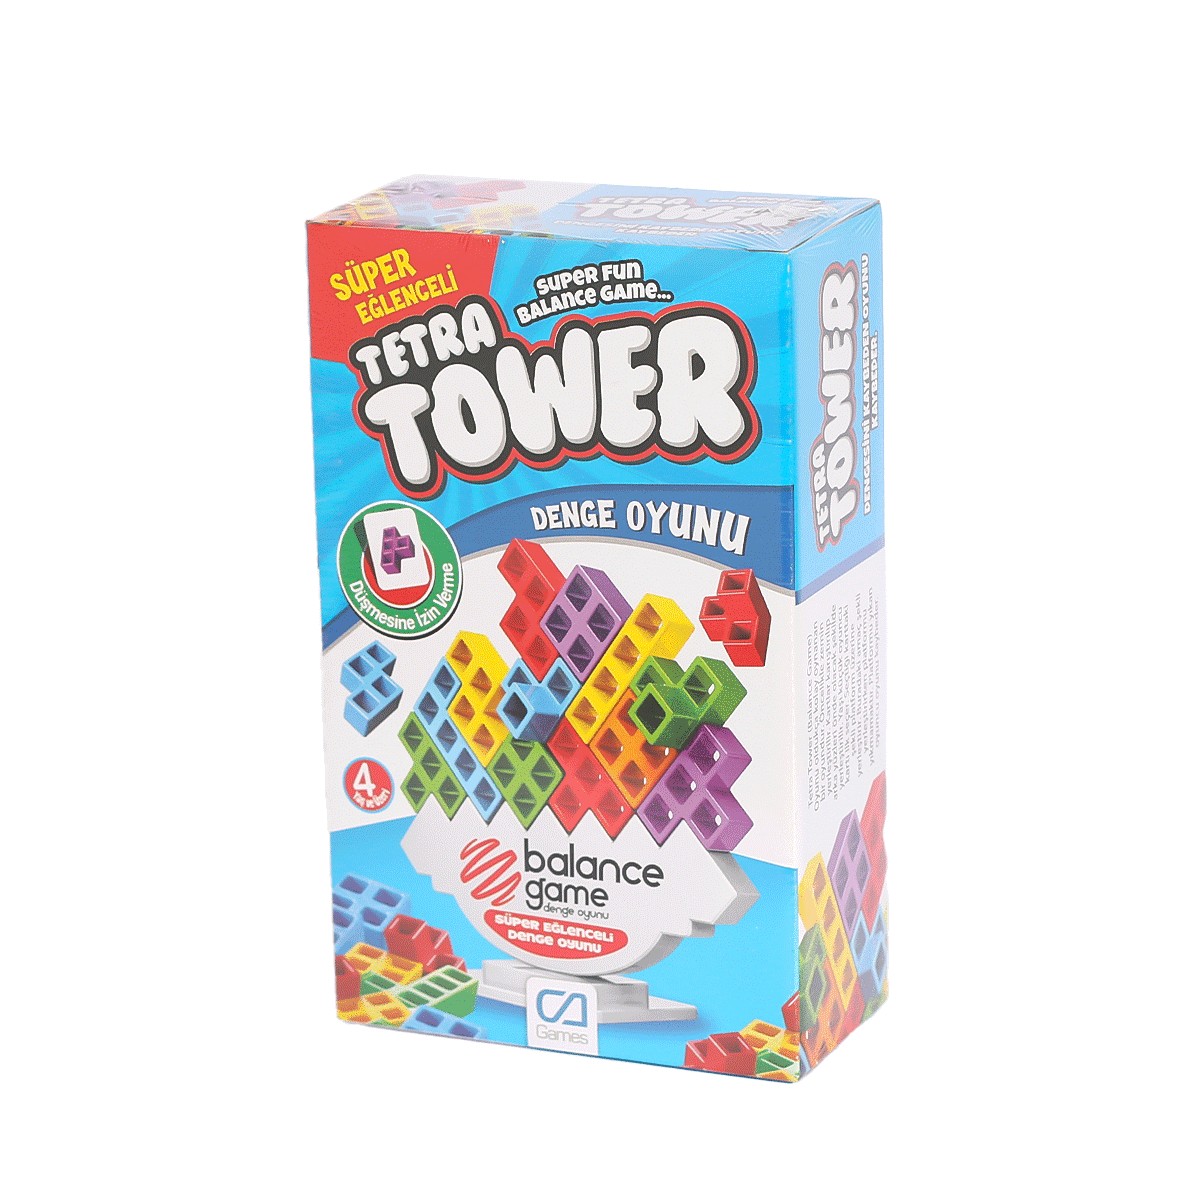 Tetra Tower Denge Oyunu